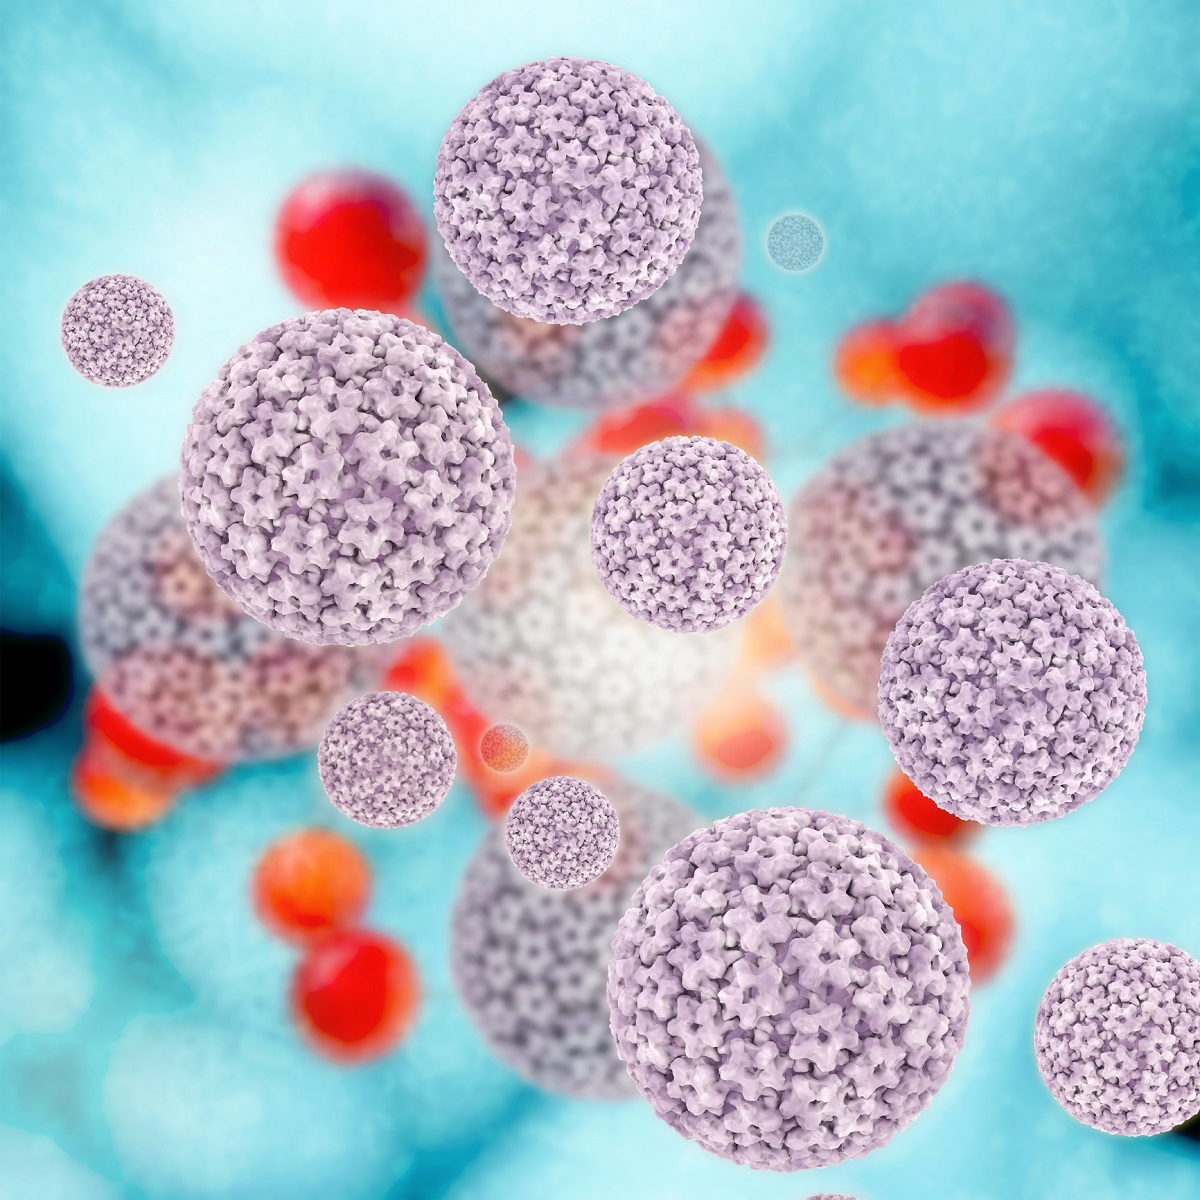 HPV virus imaging. Source.